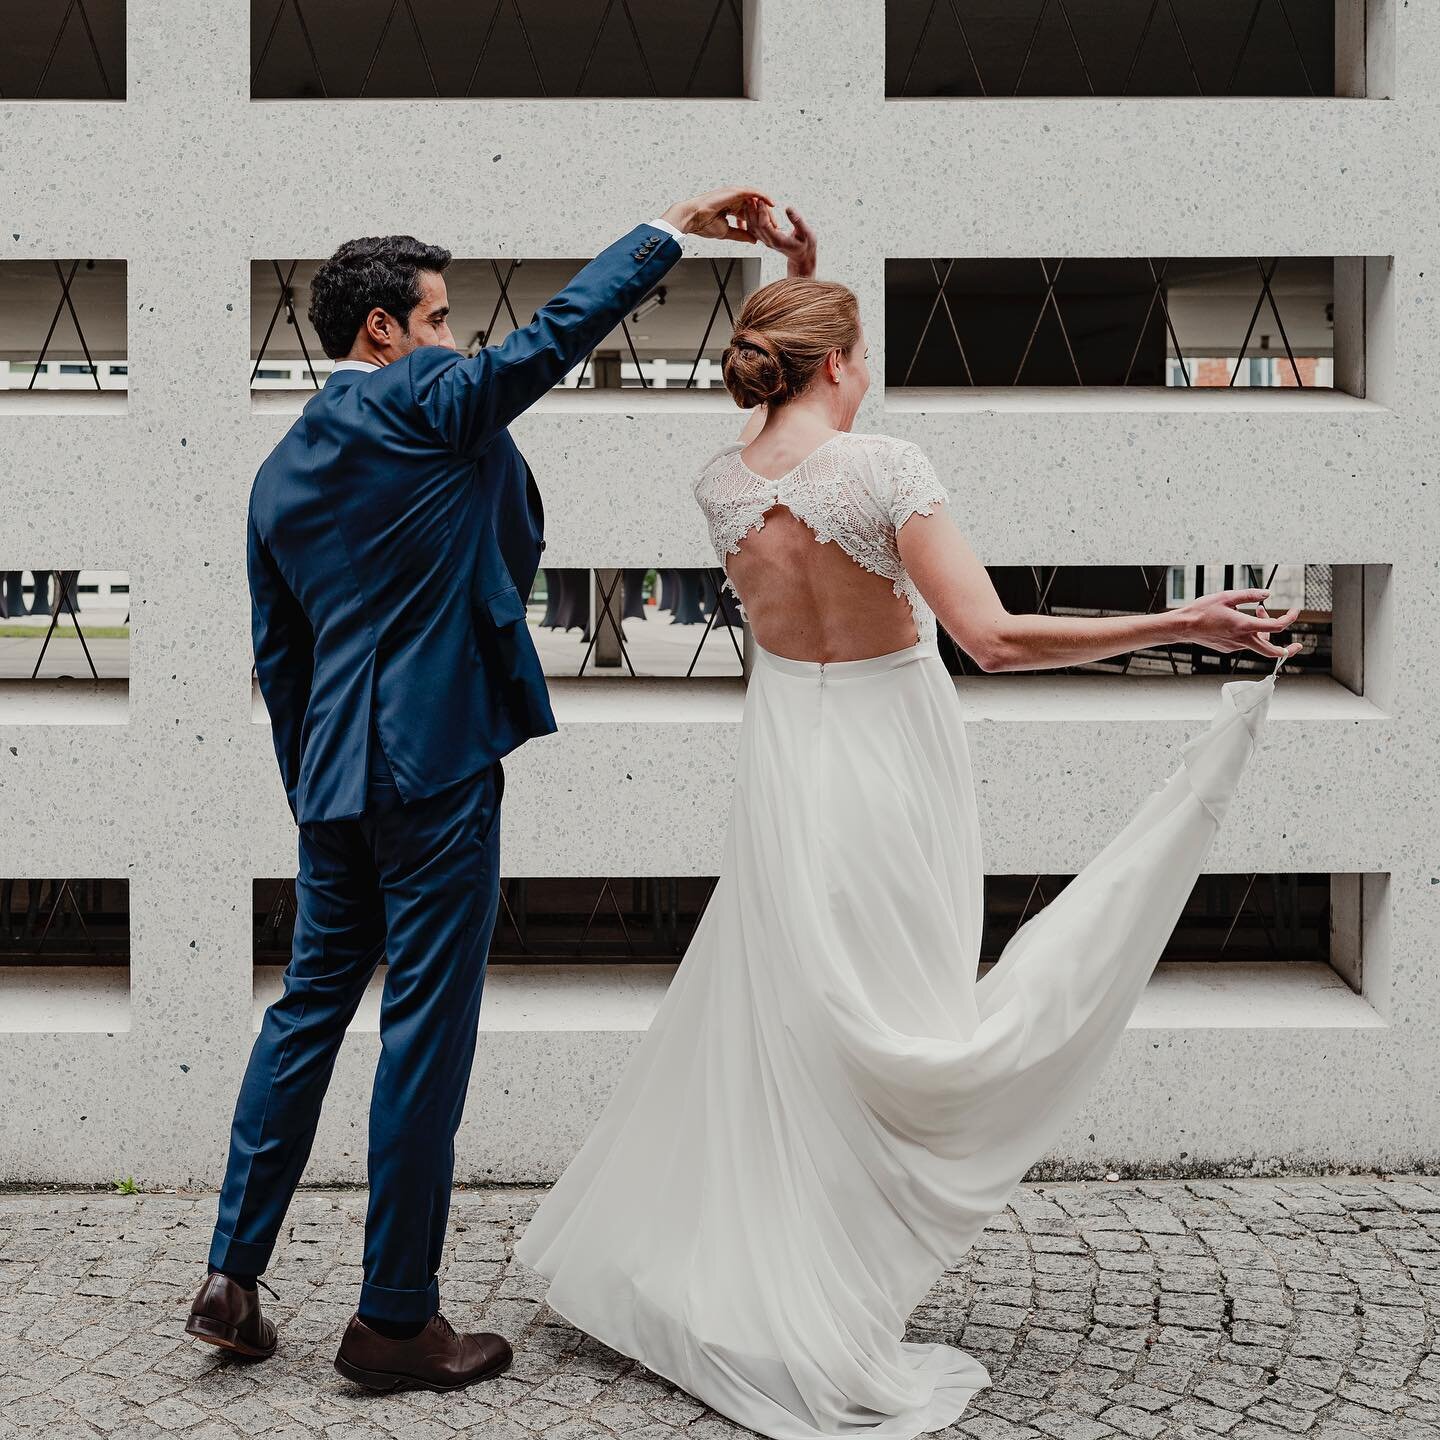 Let&rsquo;s dance! 💃🏼 

#wedding #weddingphotography #weddingphoto #dance #justmarried #weddinginspiration #weddingday